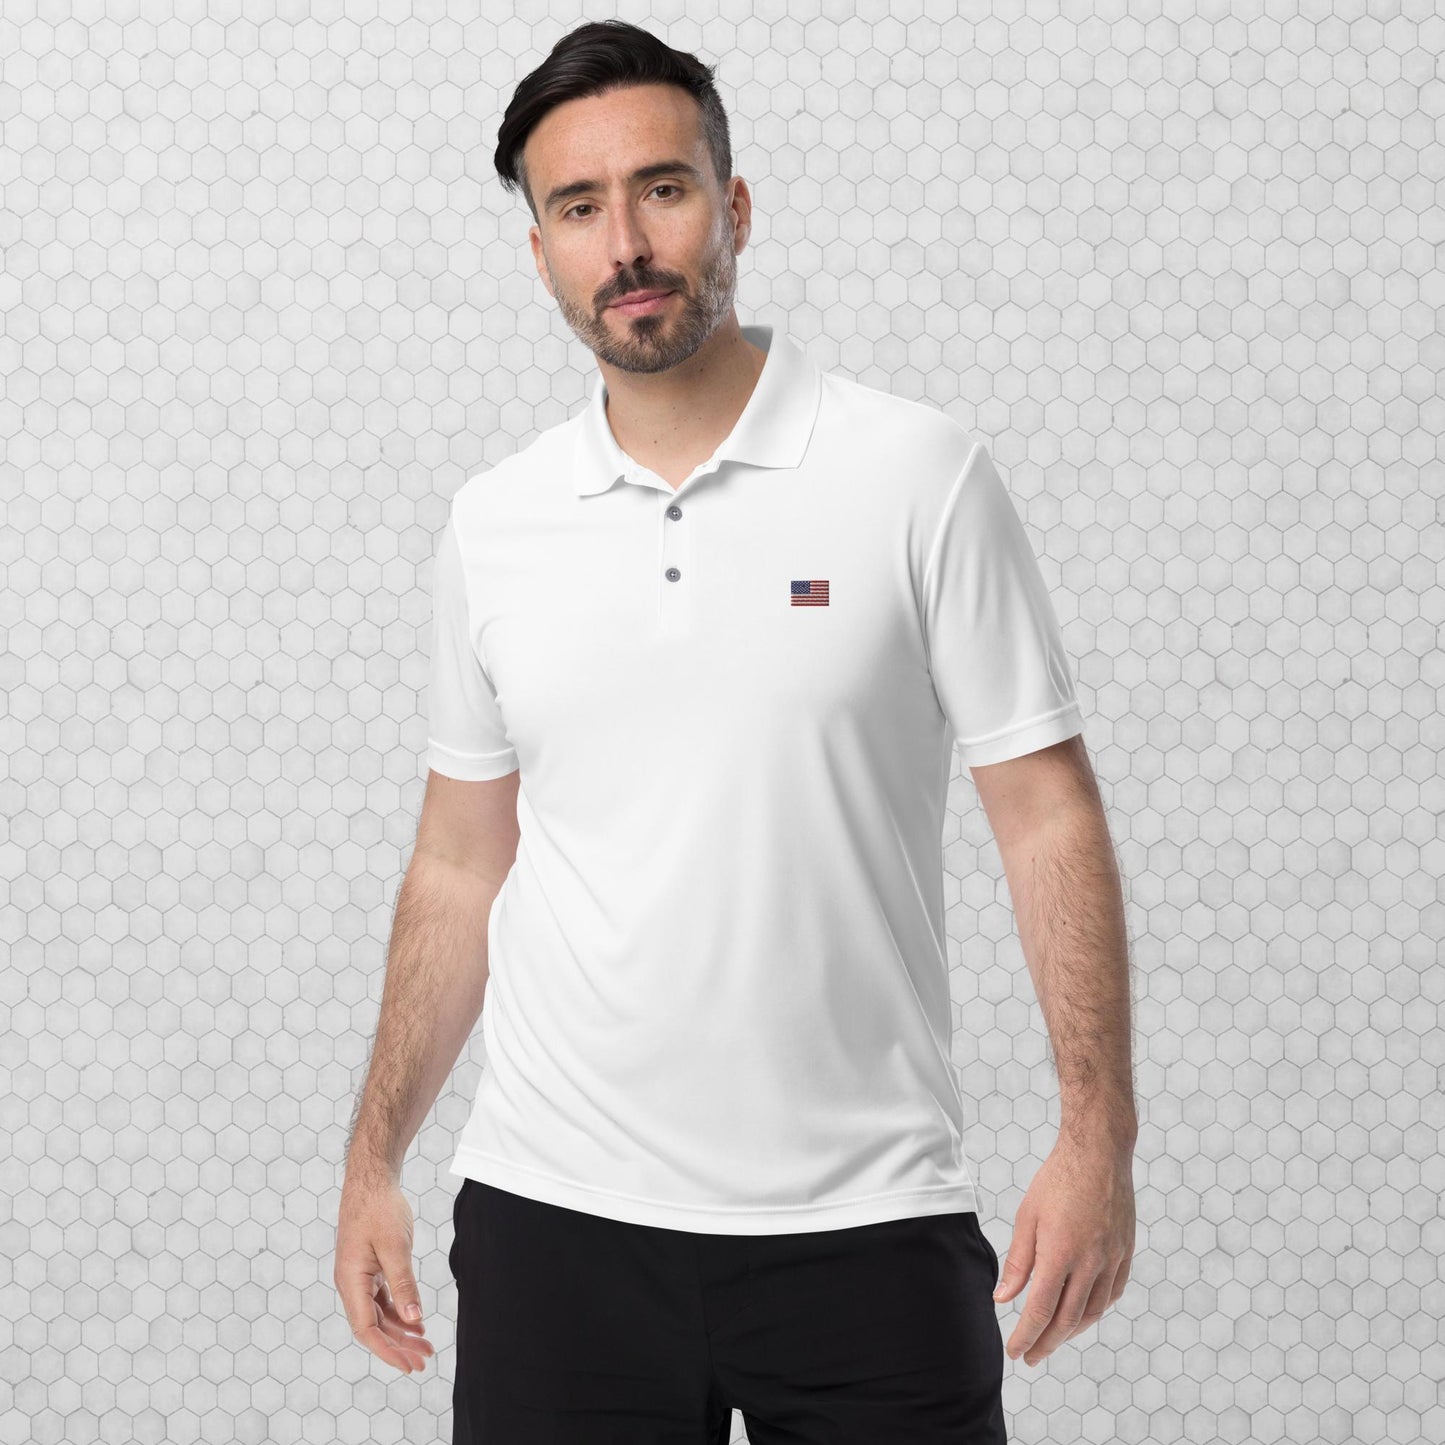 The USA Golf Shirt by Go Golf Shirts